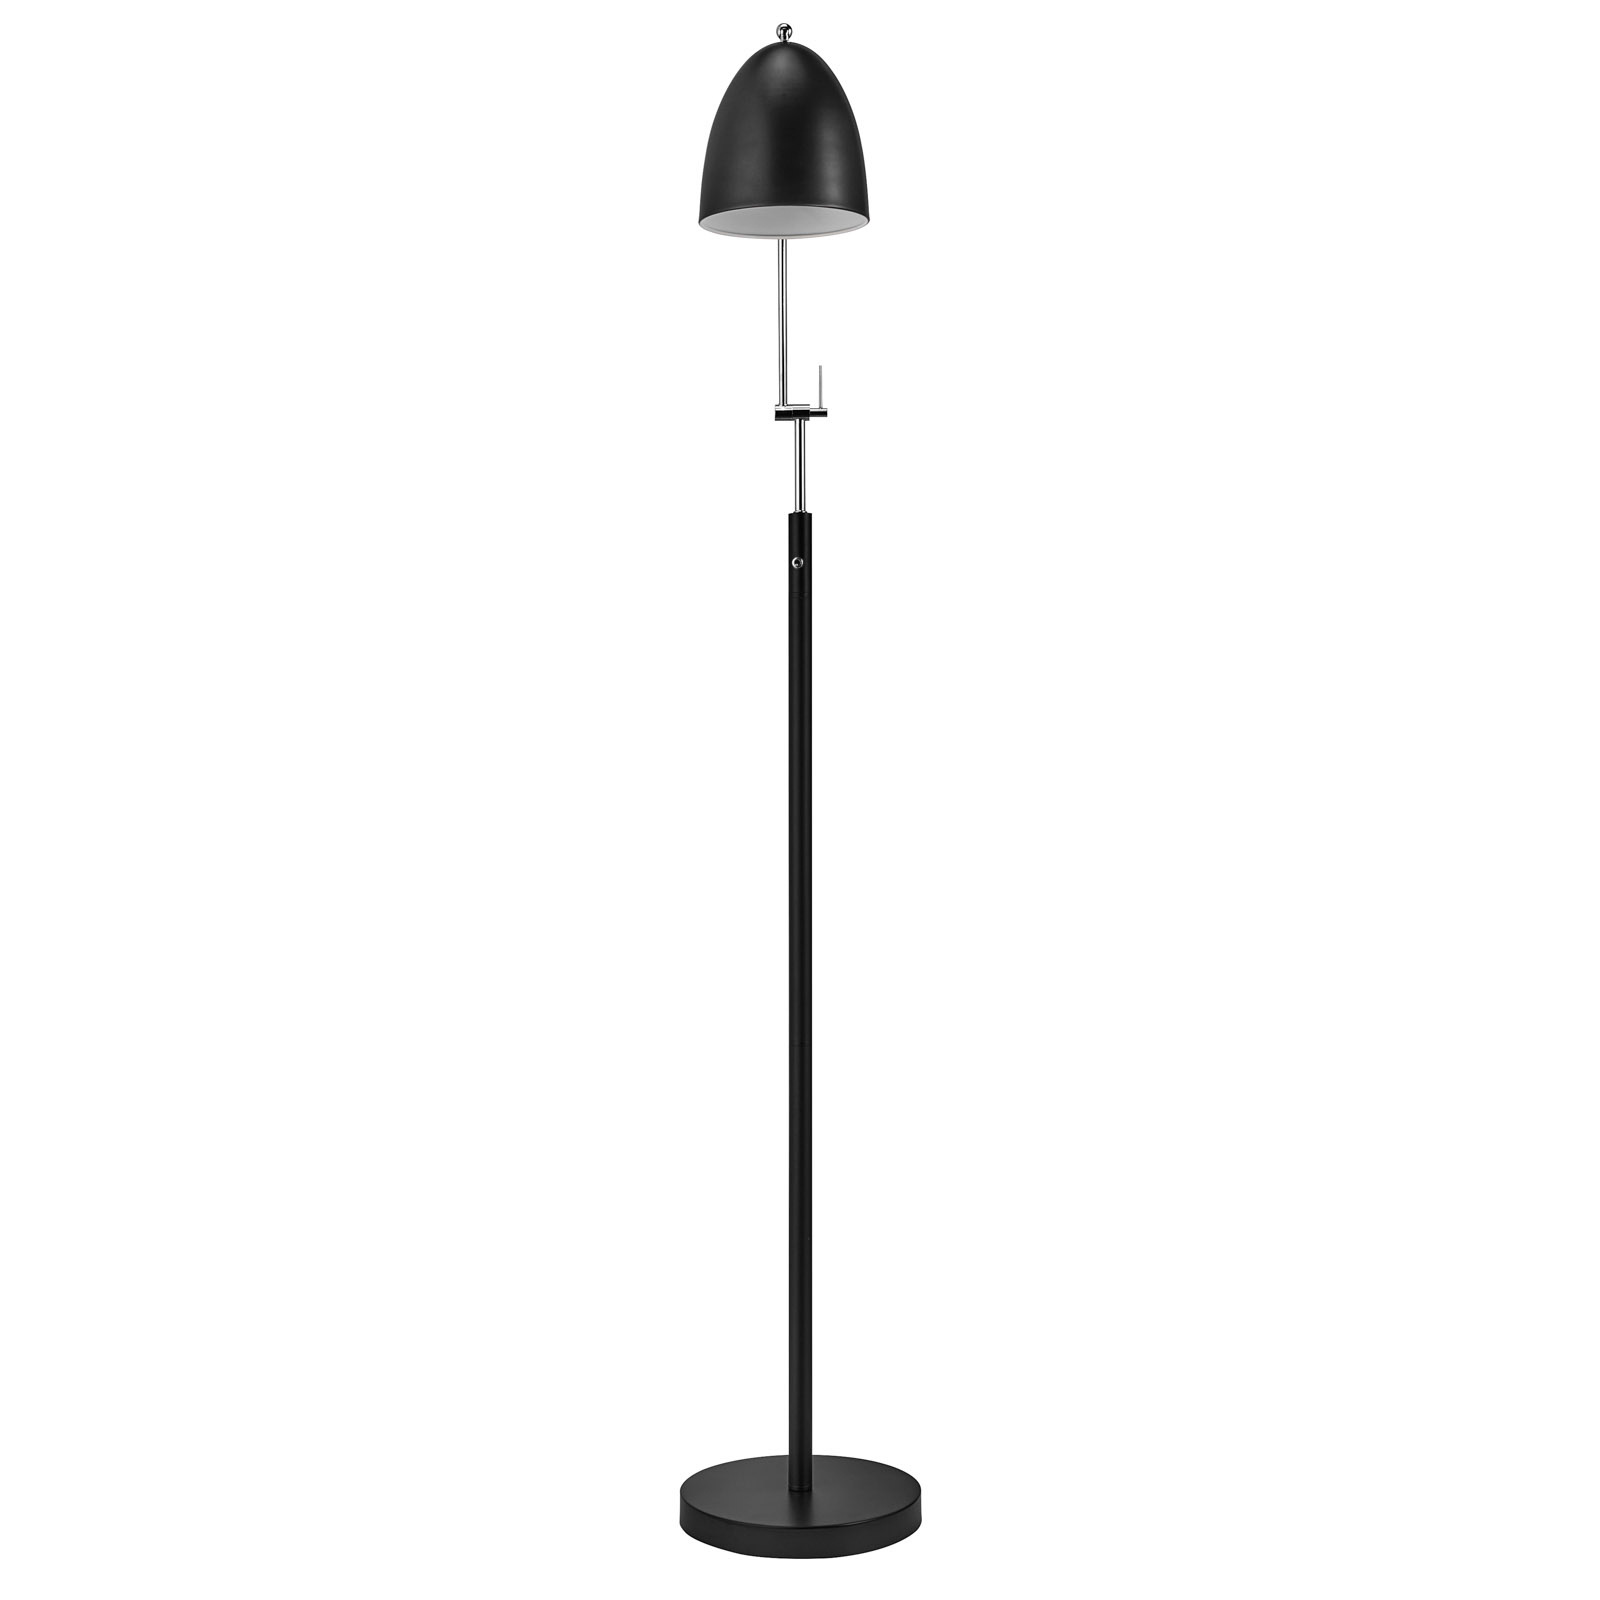 Alexander floor lamp in a graceful shape, black